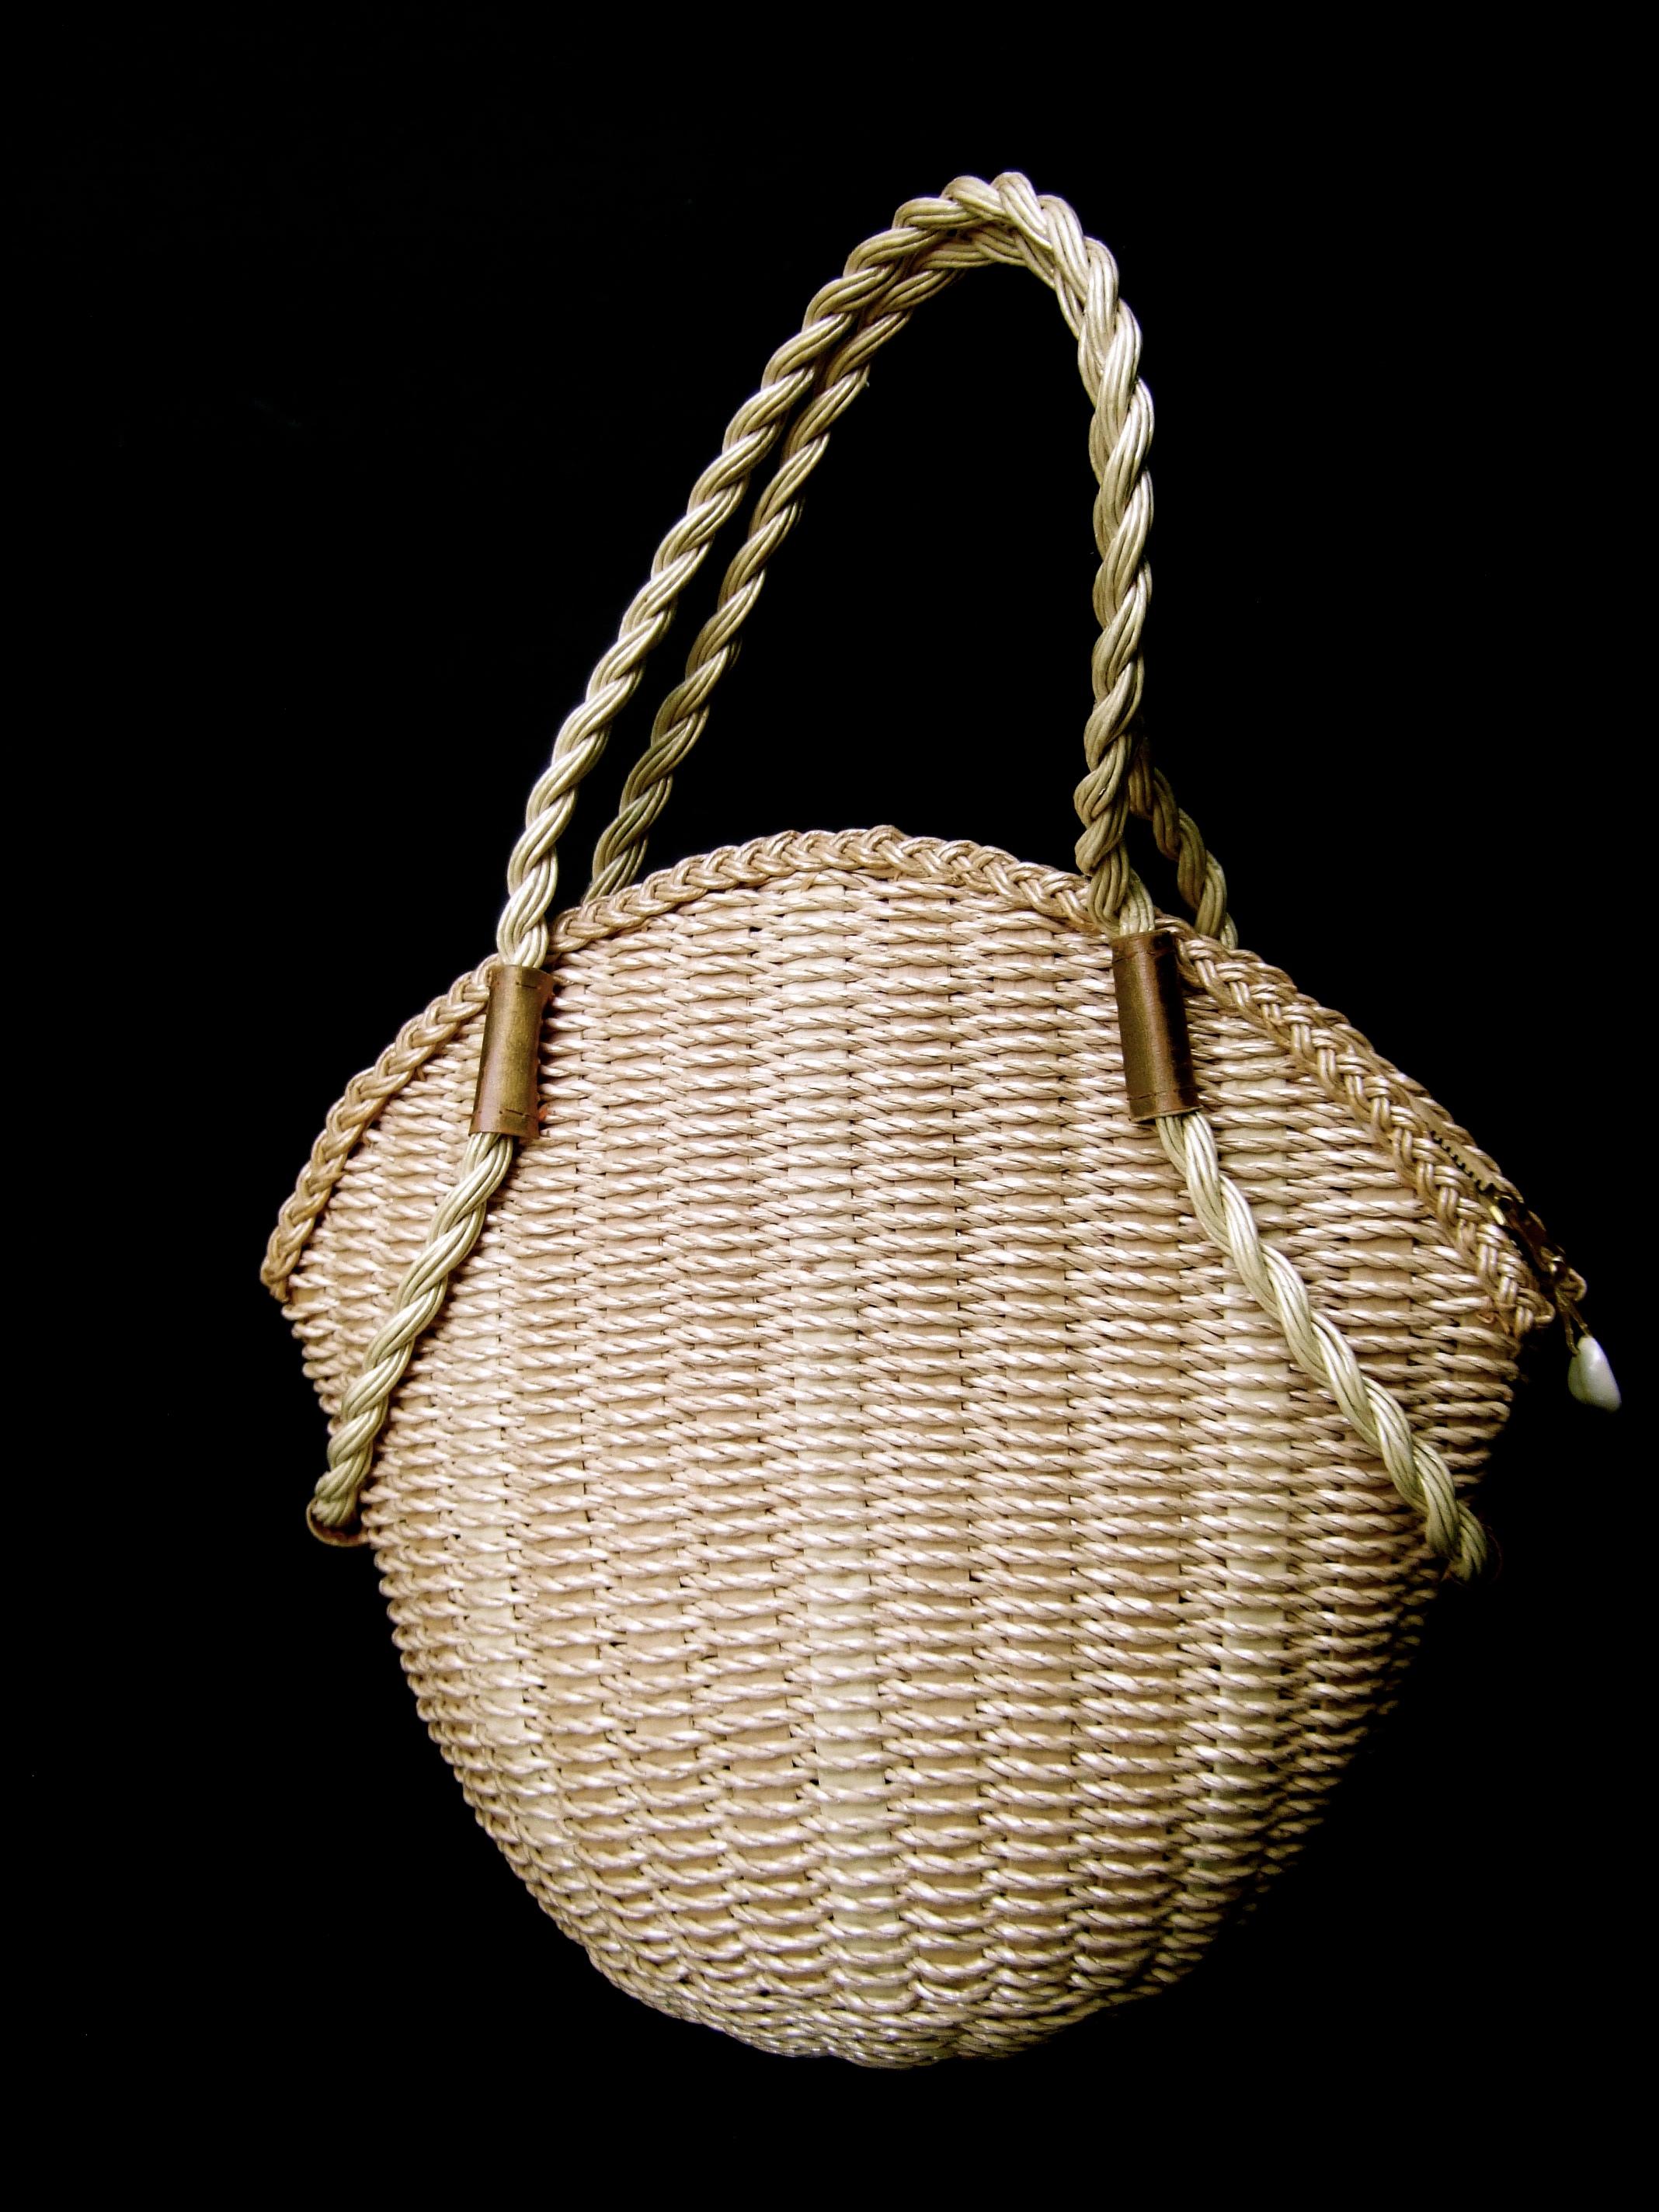 Charming Handmade Artisan Sea Life Woven Wicker Rope Summer Handbag c 1970 For Sale 3